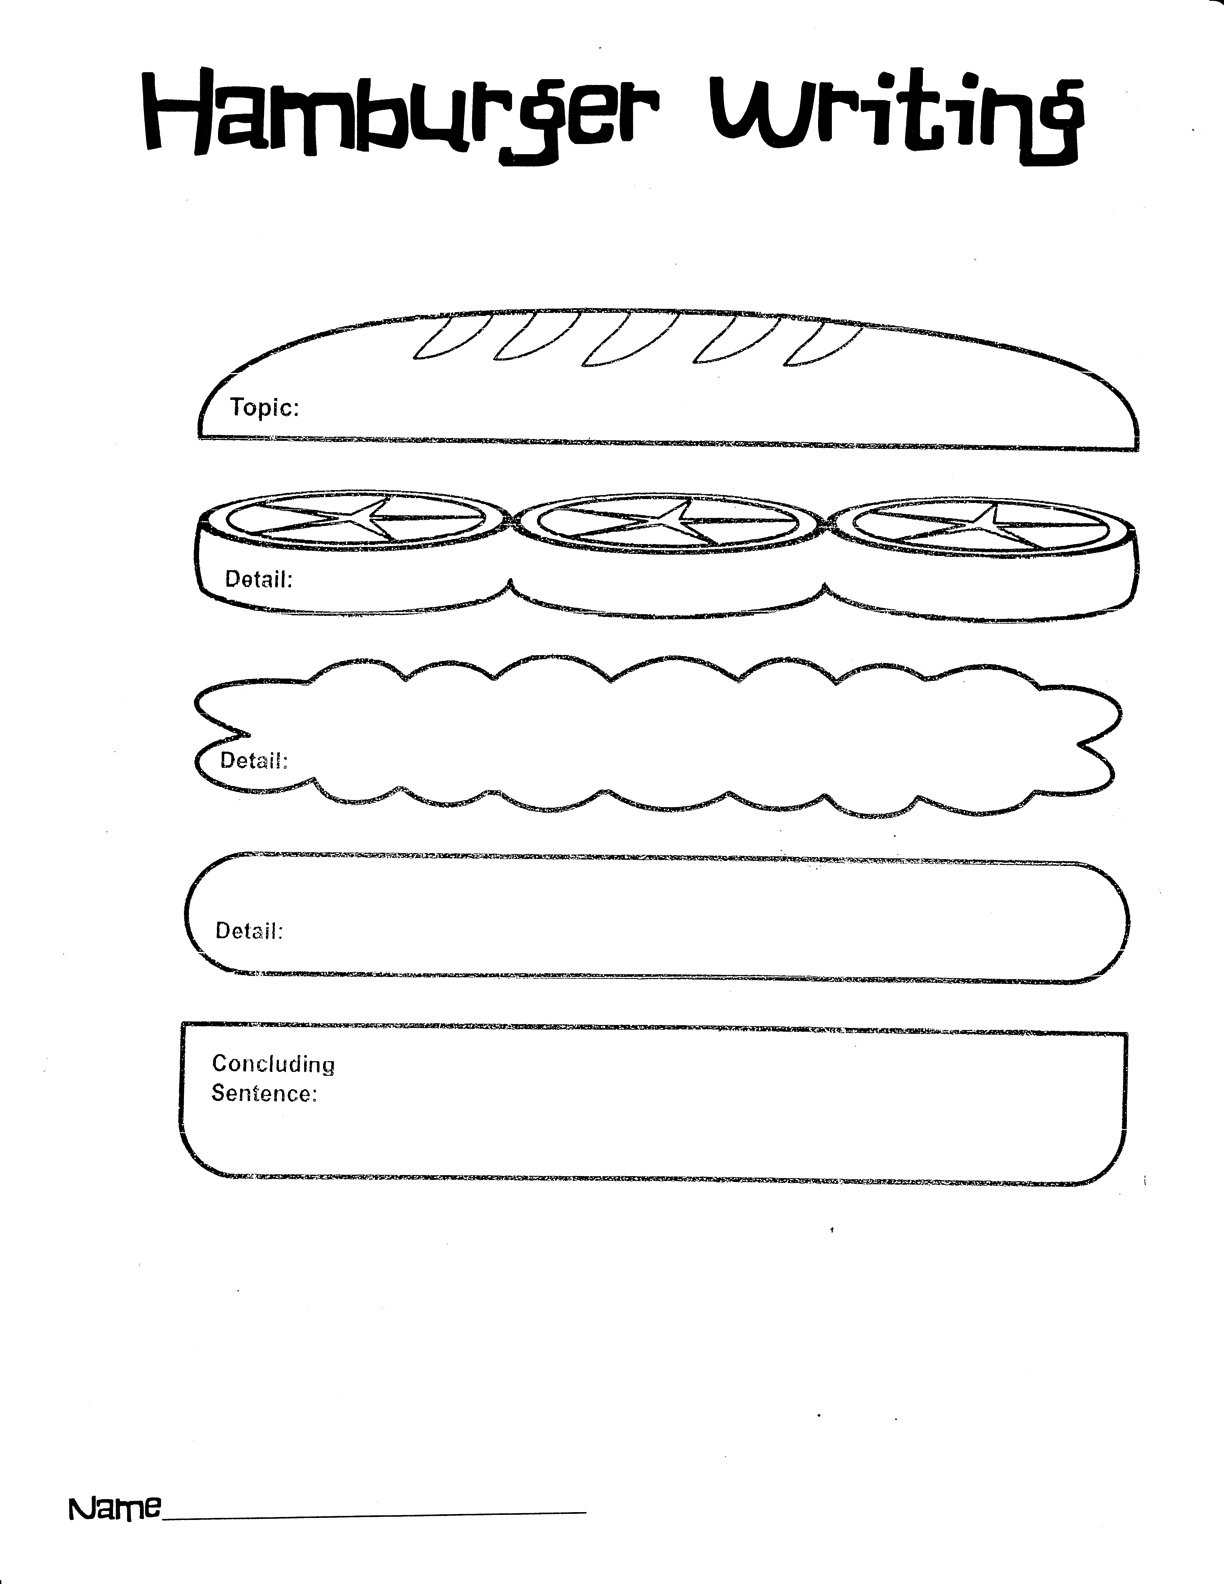 What The Teacher Wants   Hamburger Writing